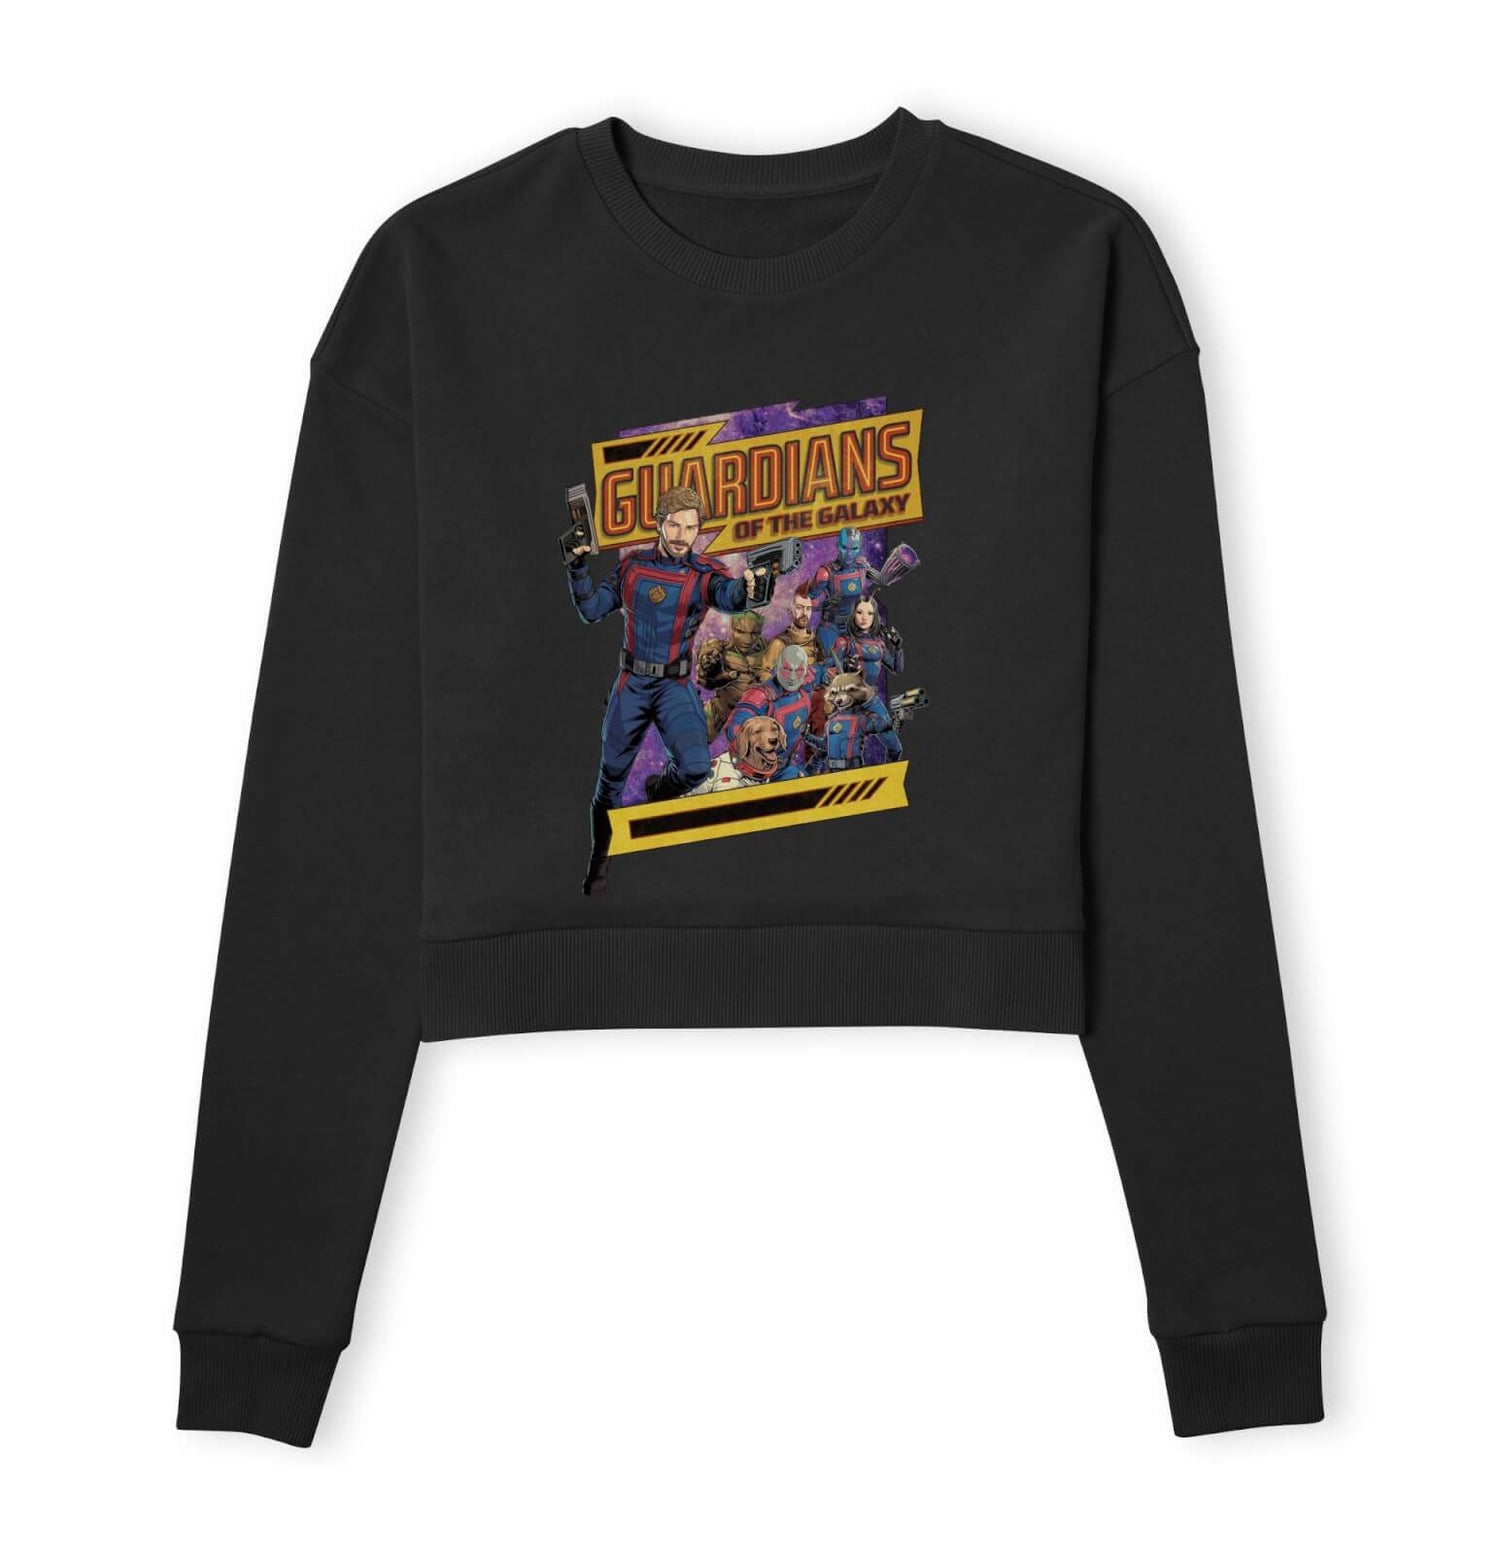 Guardians of the Galaxy Galaxy Women's Cropped Sweatshirt - Black